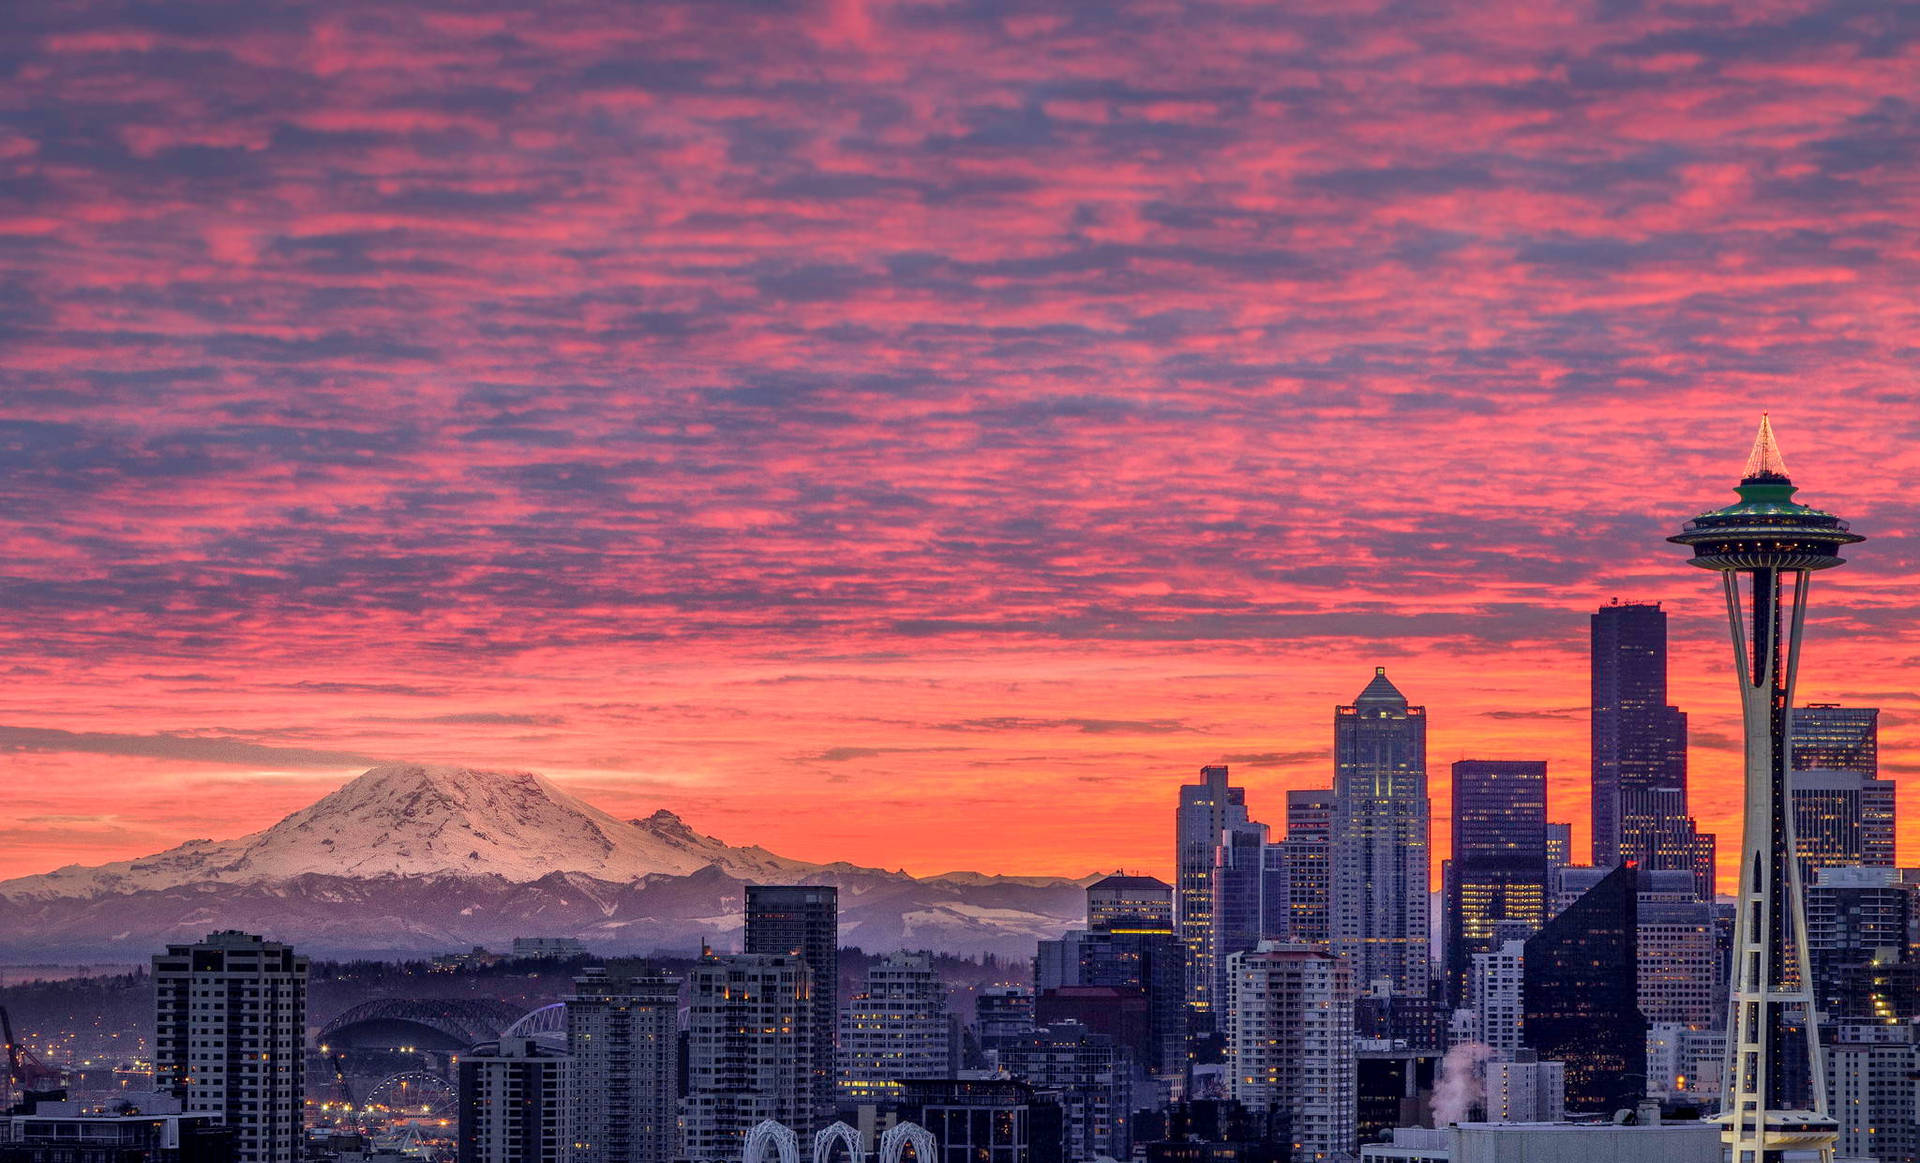 Sunset Sky In Seattle